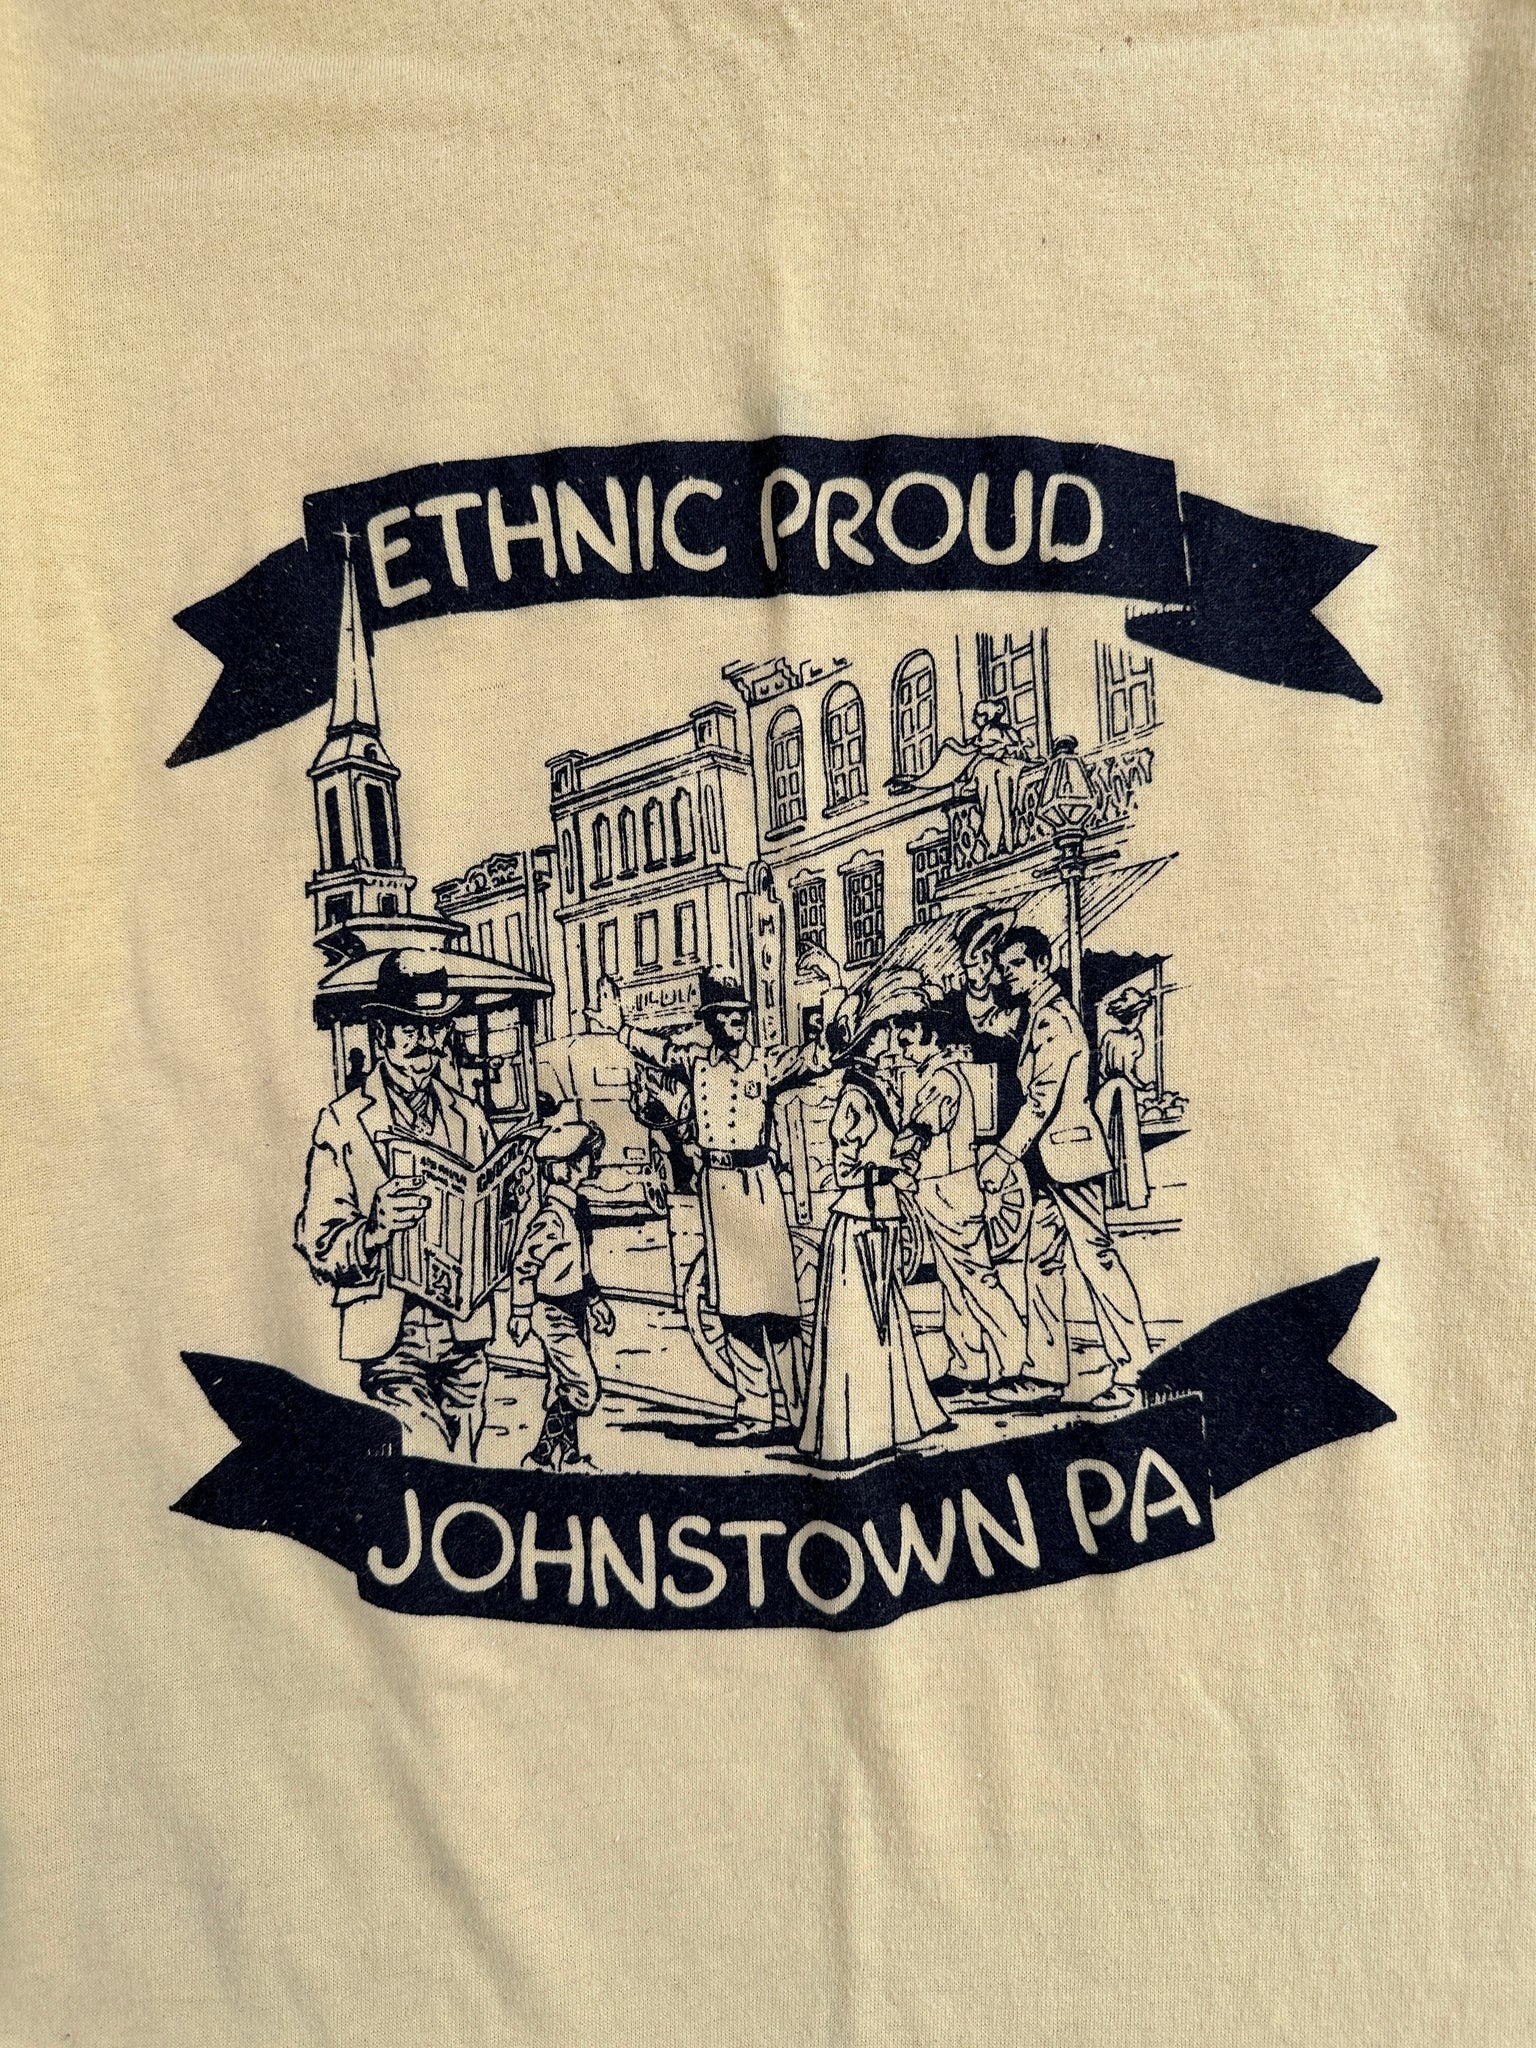 ethnic proud johnstown pa tee